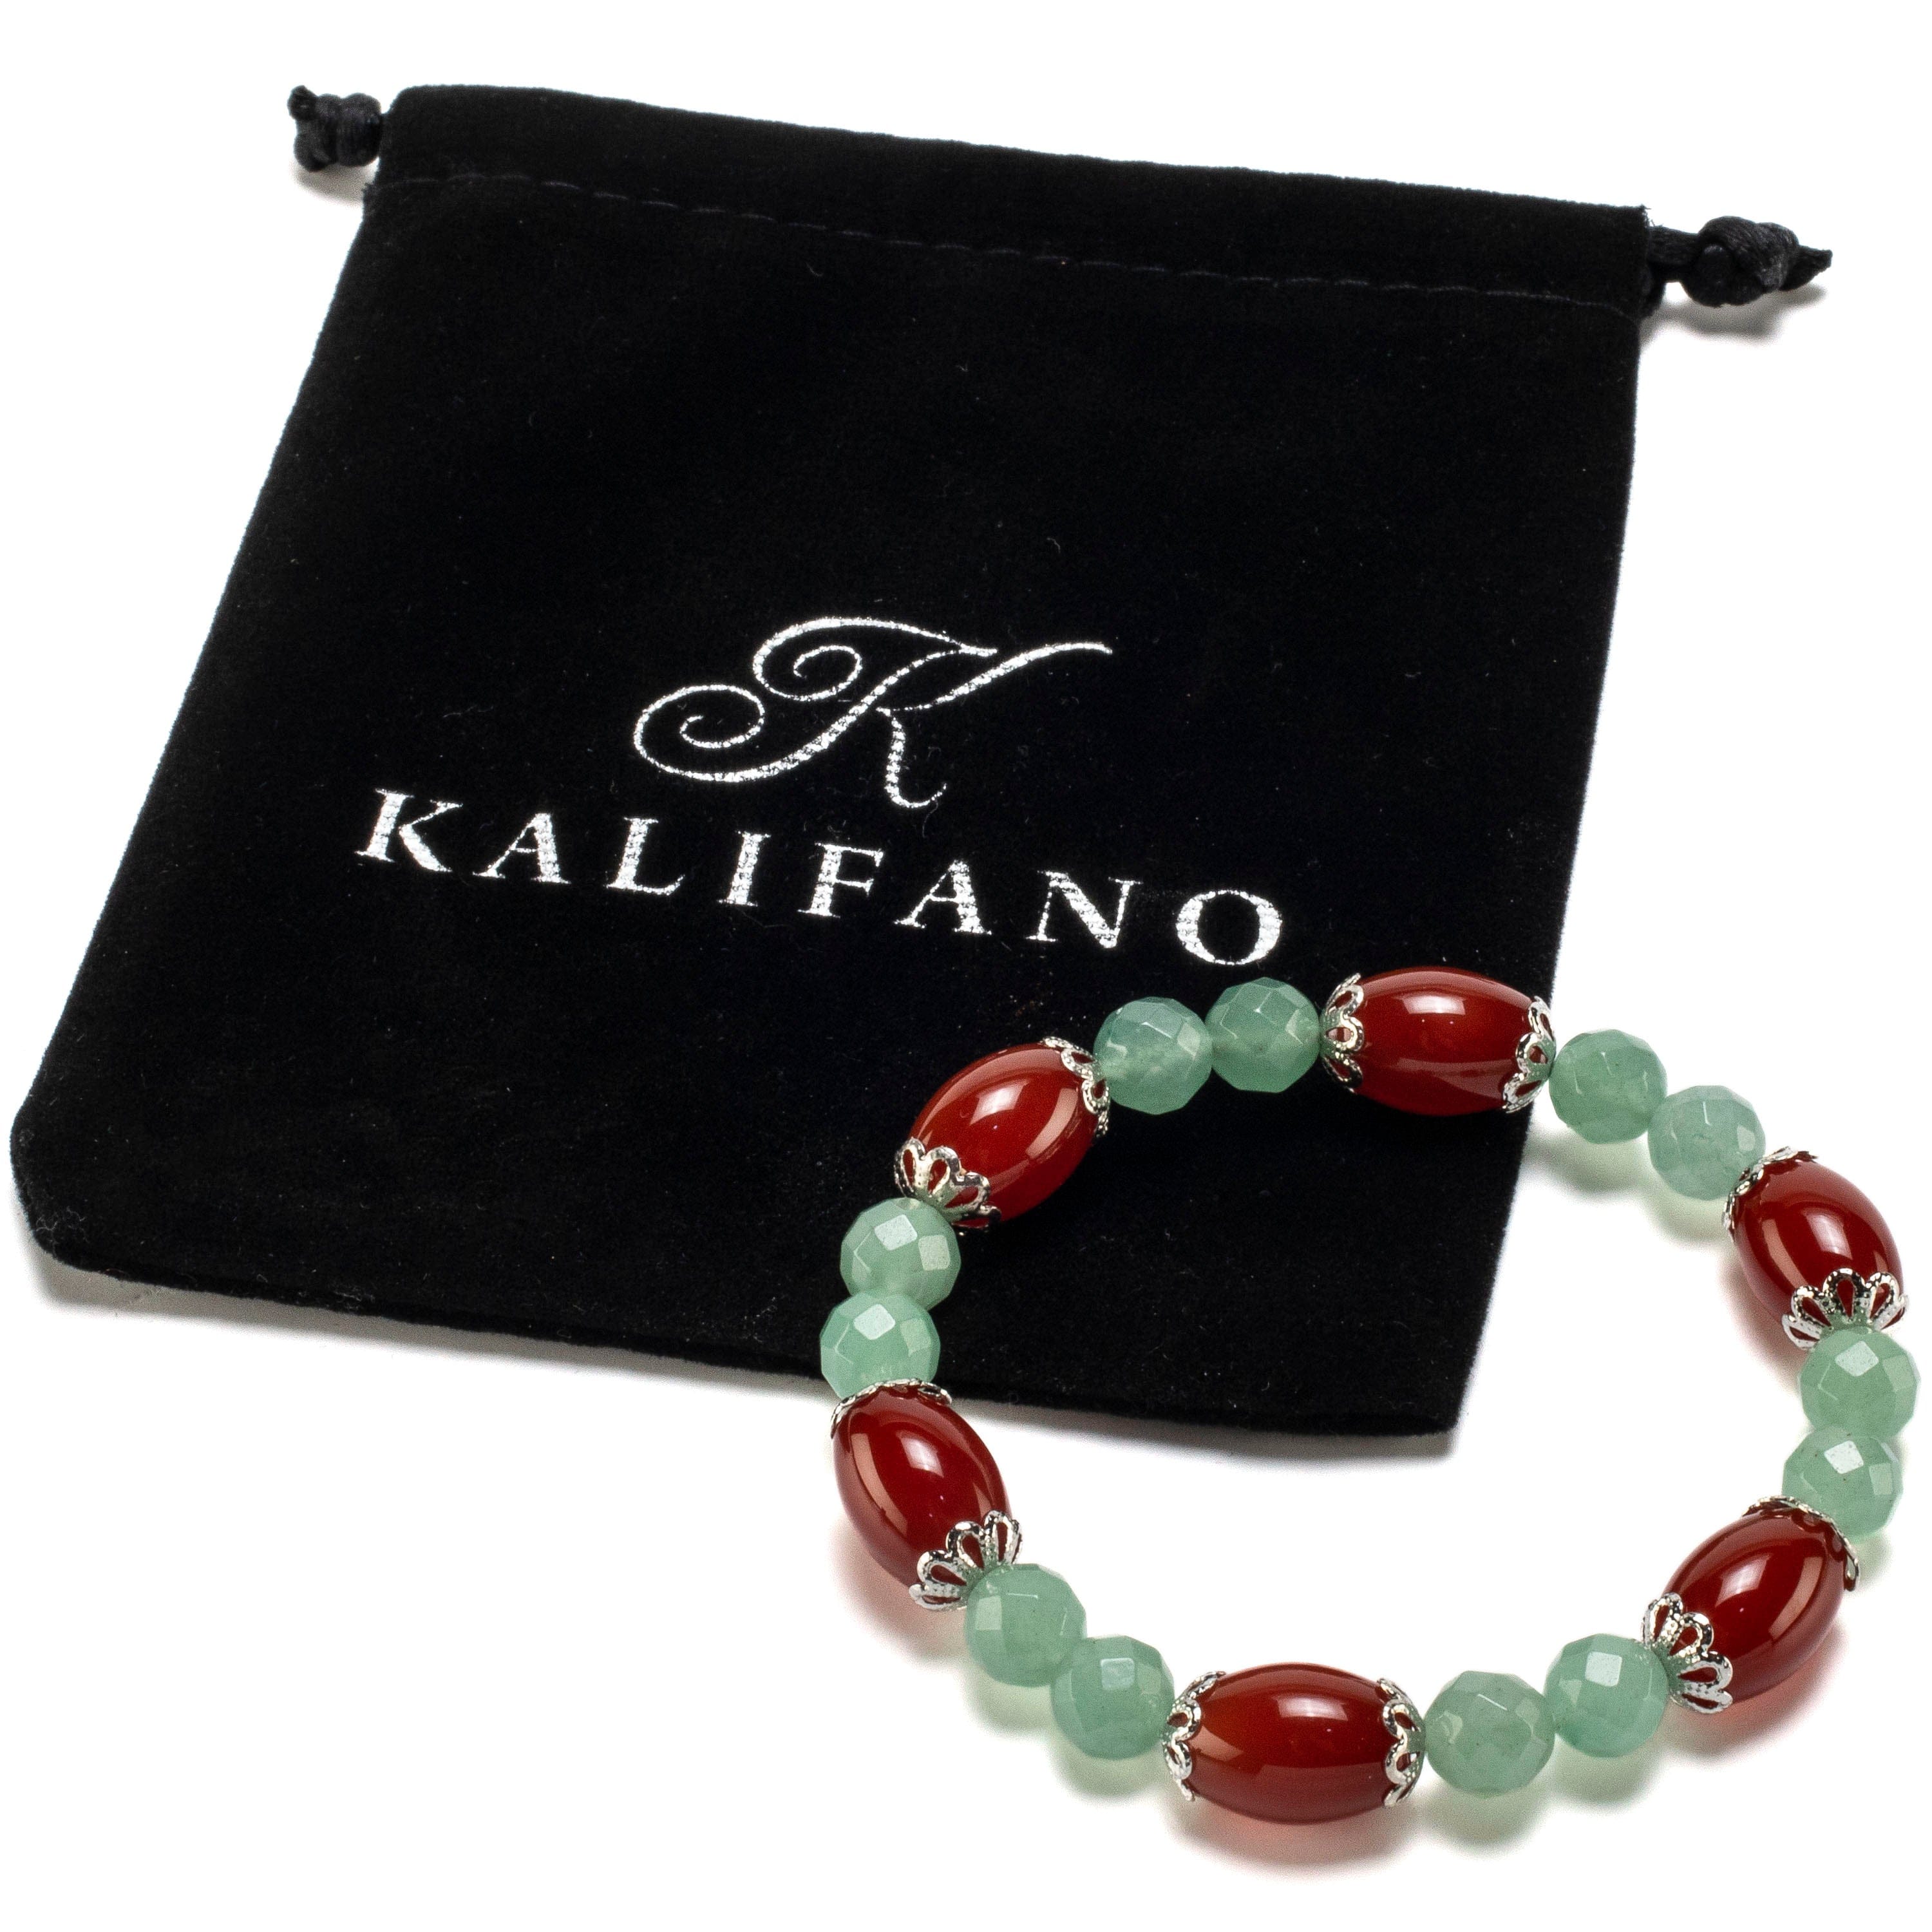 Kalifano Gemstone Bracelets Oval Carnelian and Round Faceted Aventurine with Crystal Accent Beads Gemstone Elastic Bracelet BLUE-BGP-009